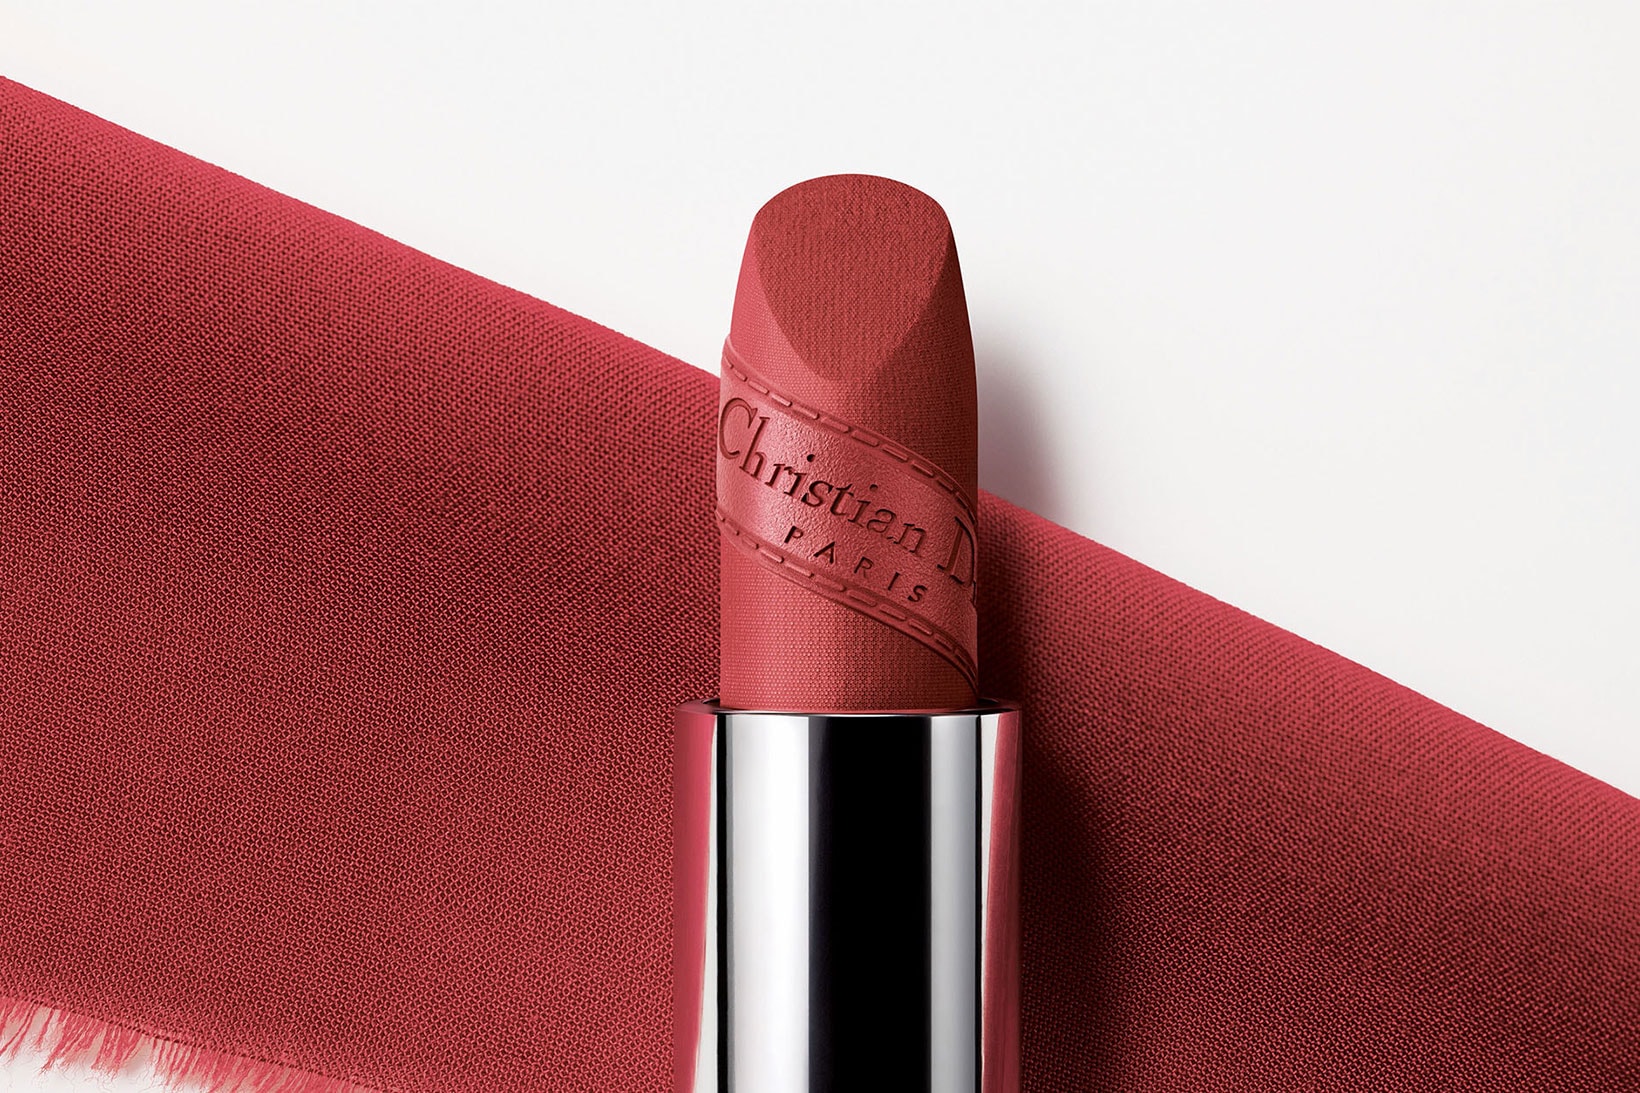 Dior Beauty The Iconic Signature lipstick